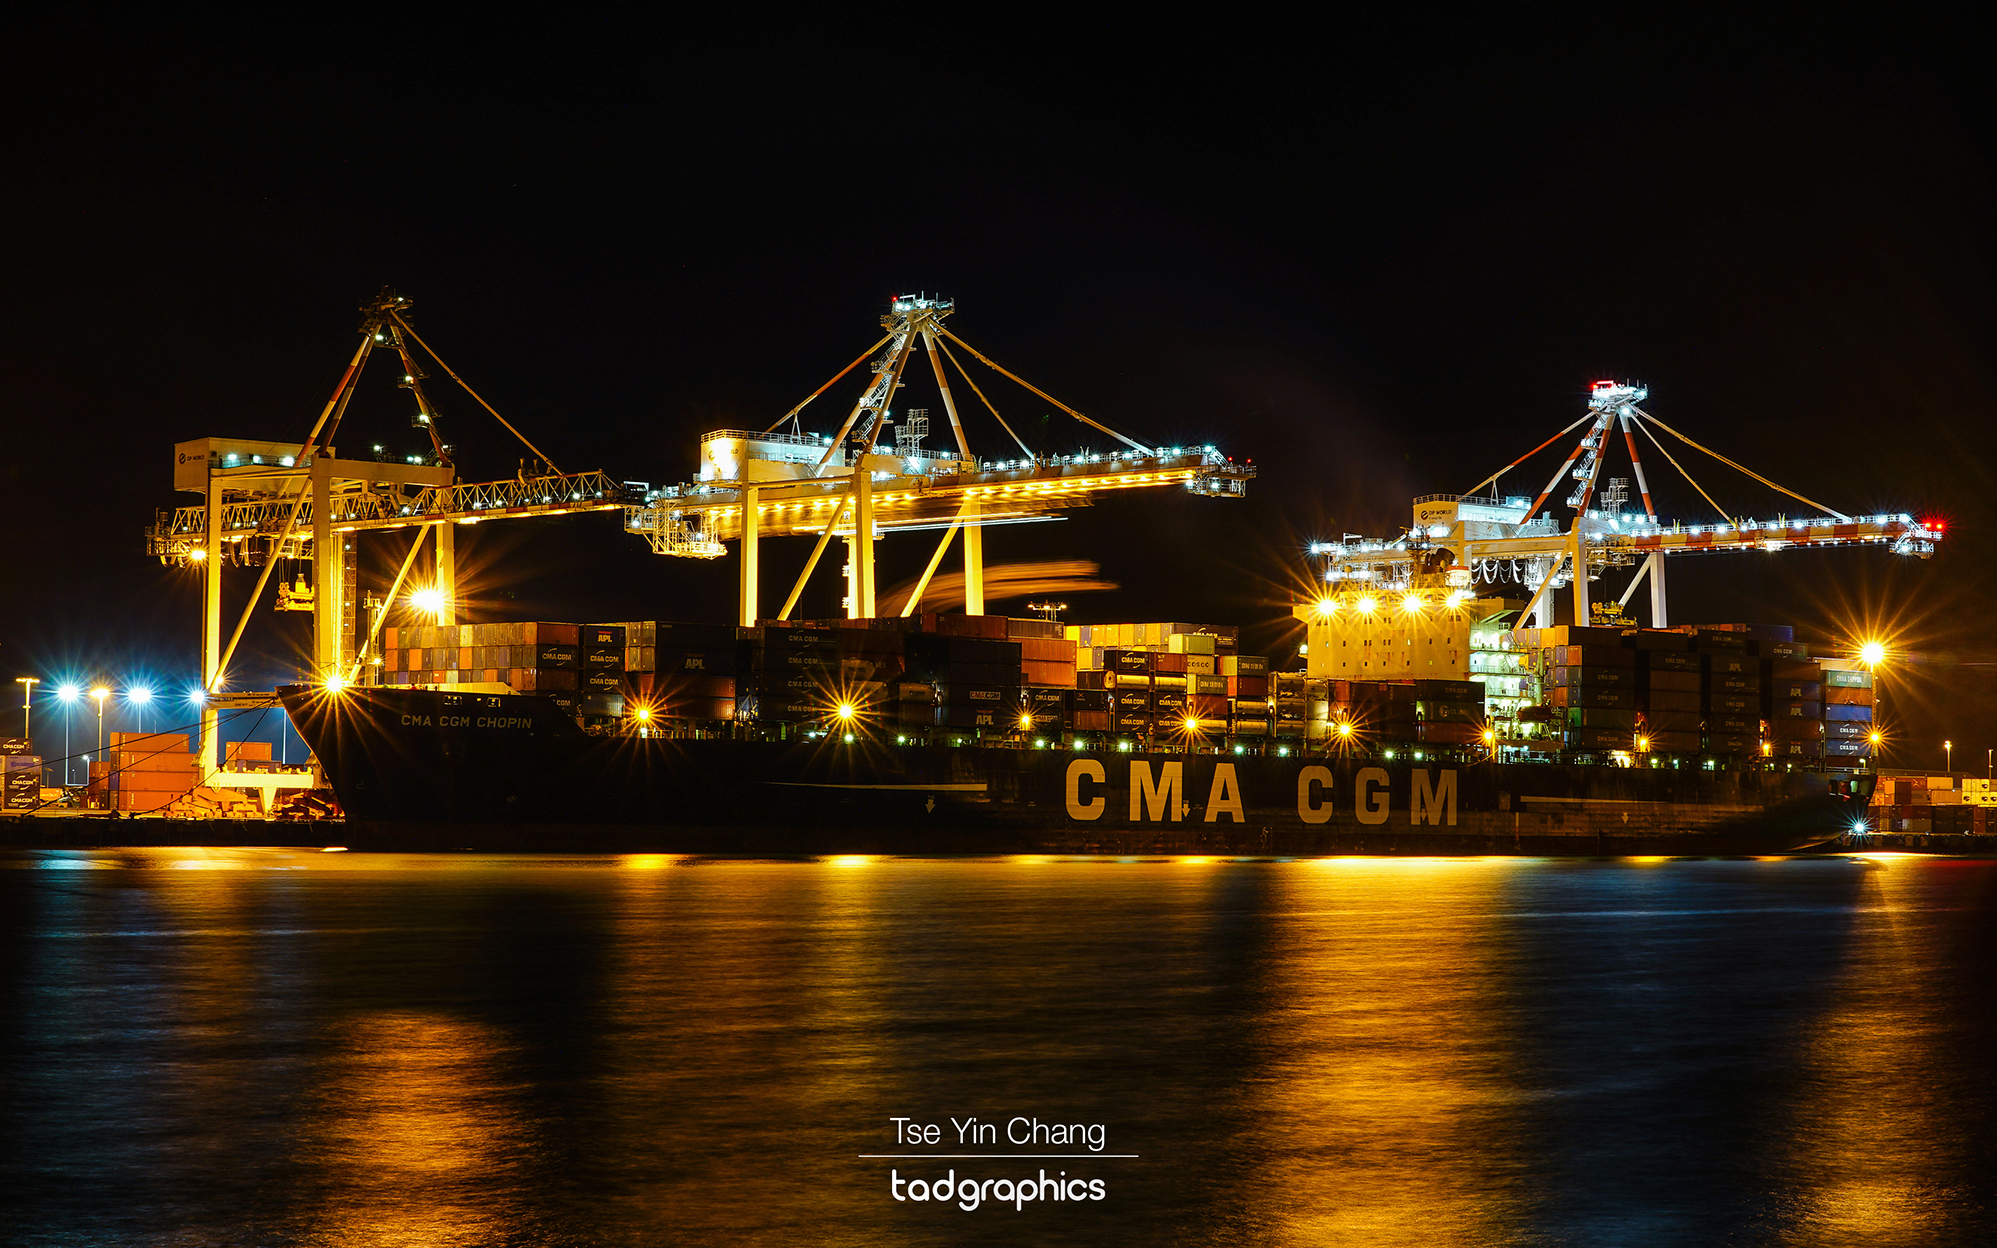 The brightly lit gantry crane at the Fremantle Port